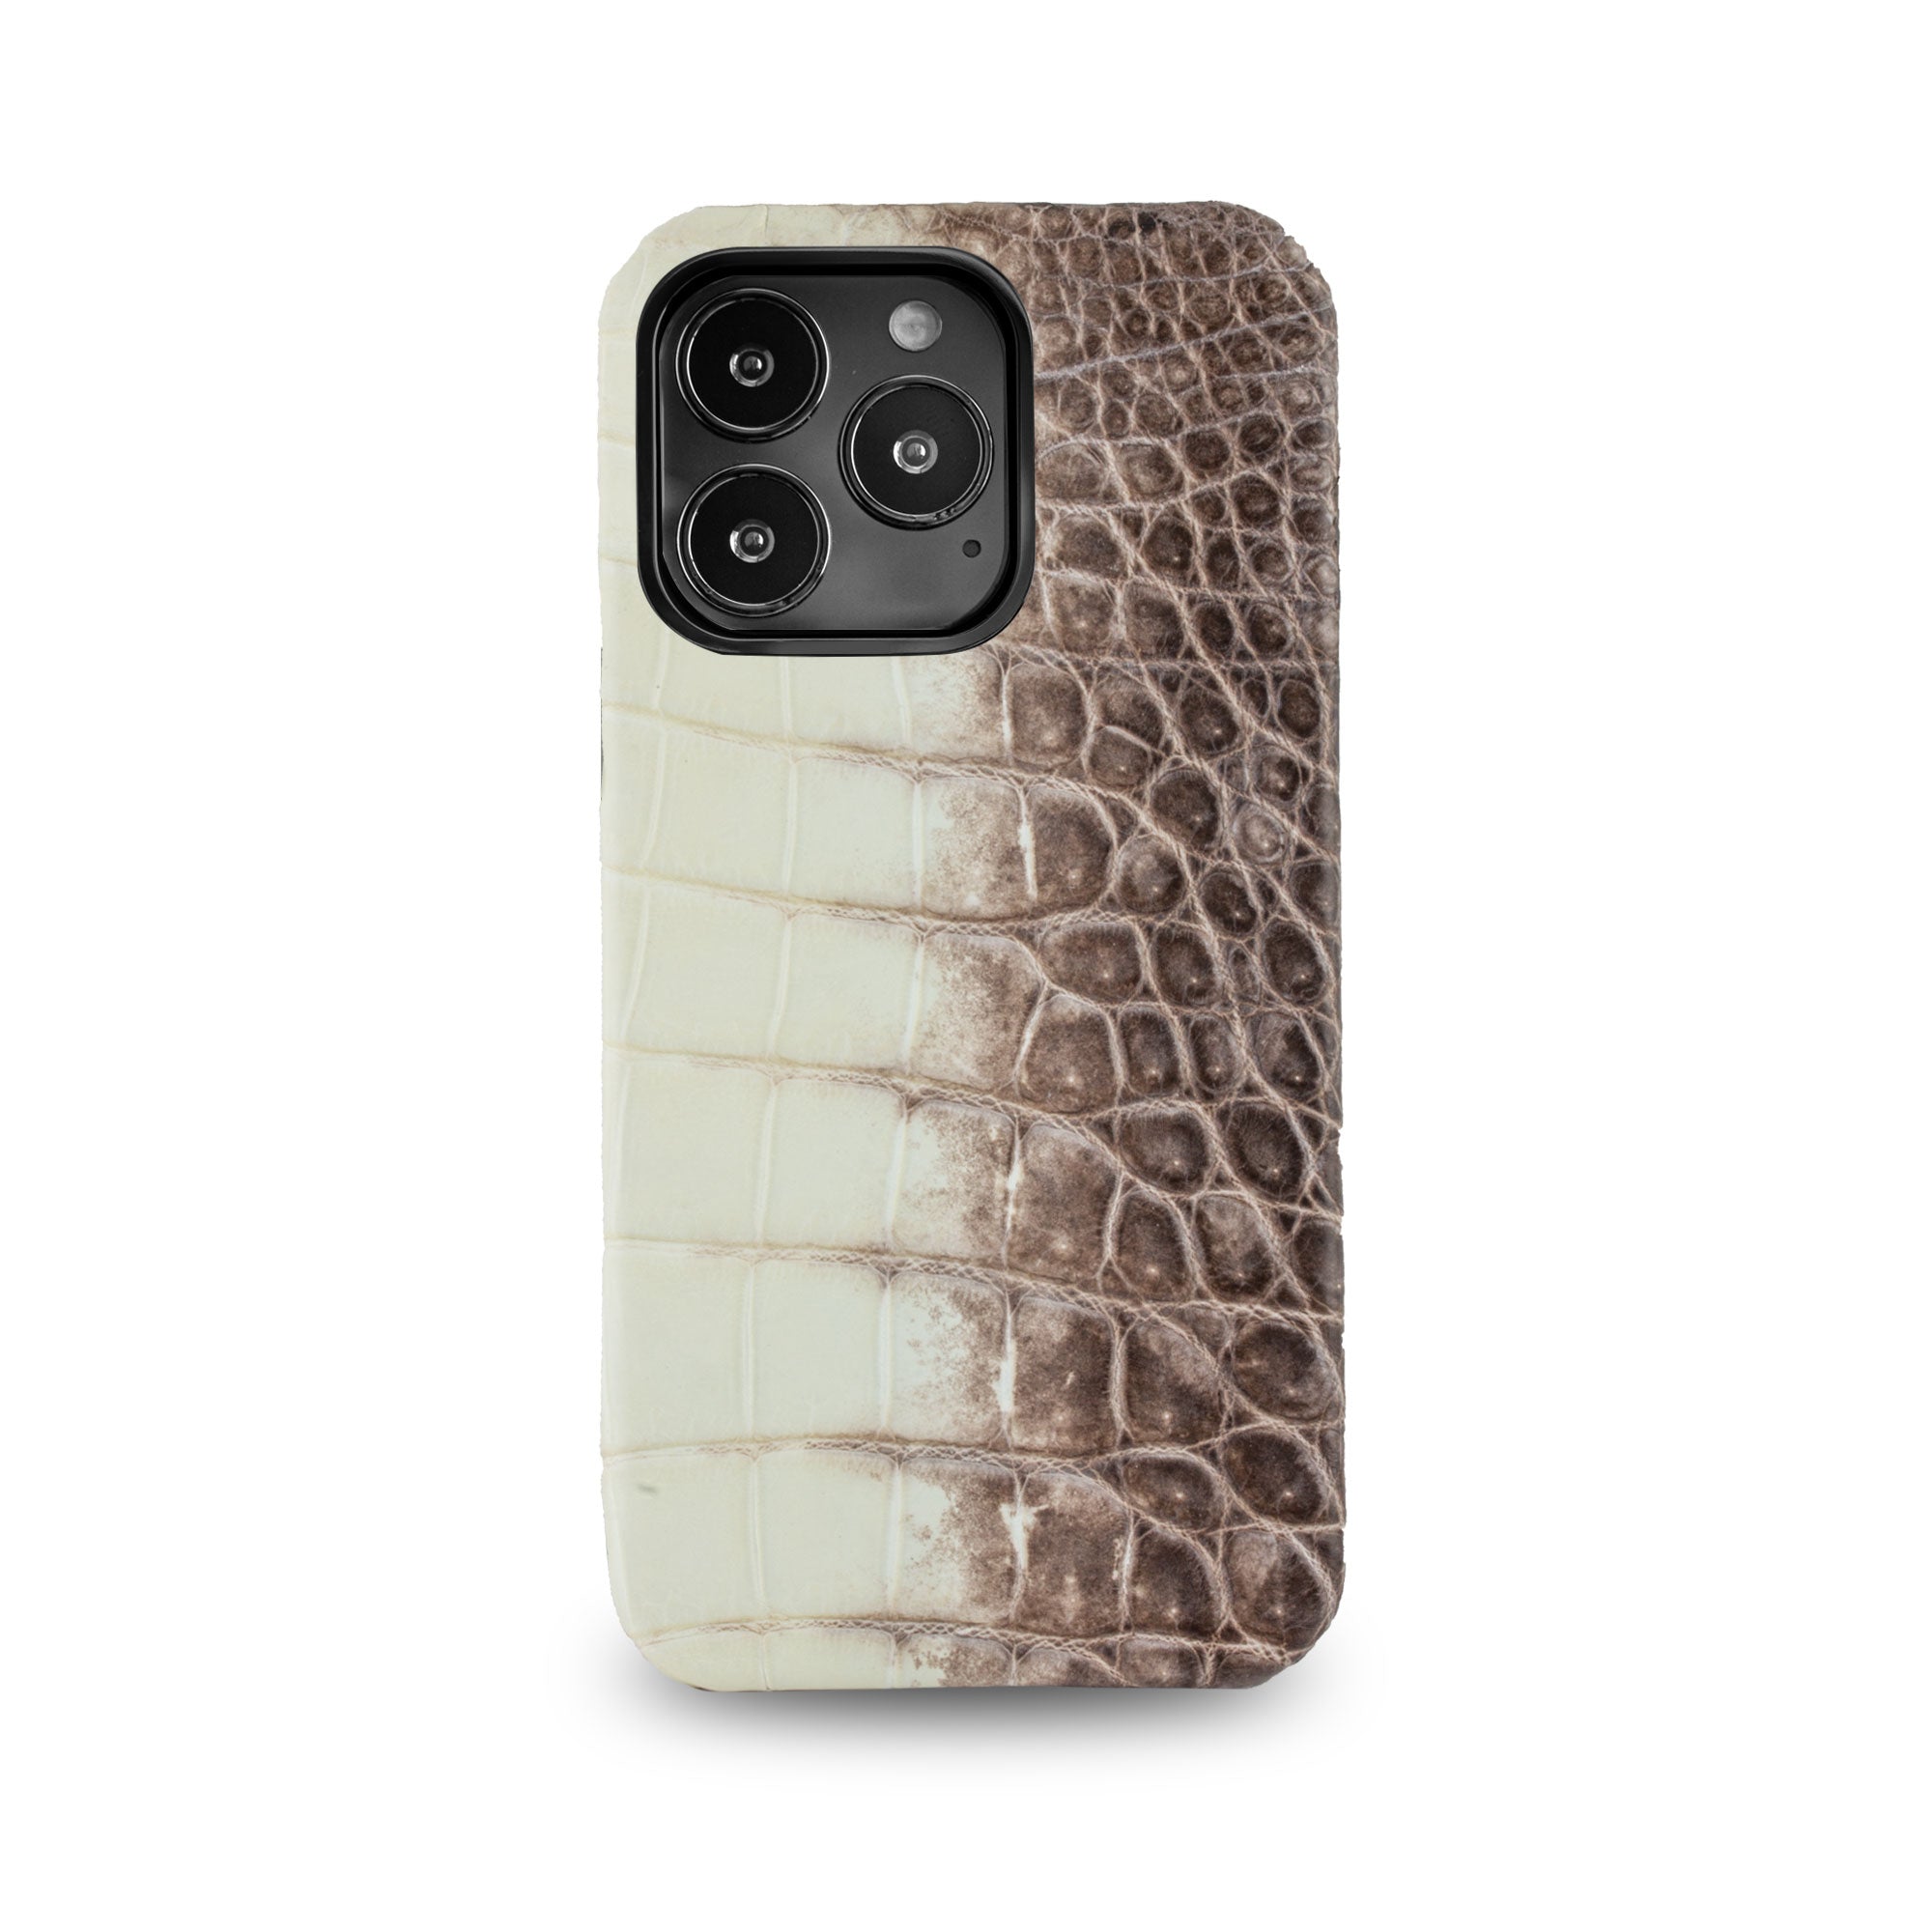 Leather iPhone HIMALAYA case / cover - iPhone 15, 14 & 13 ( Pro / Max ) - Genuine crocodile